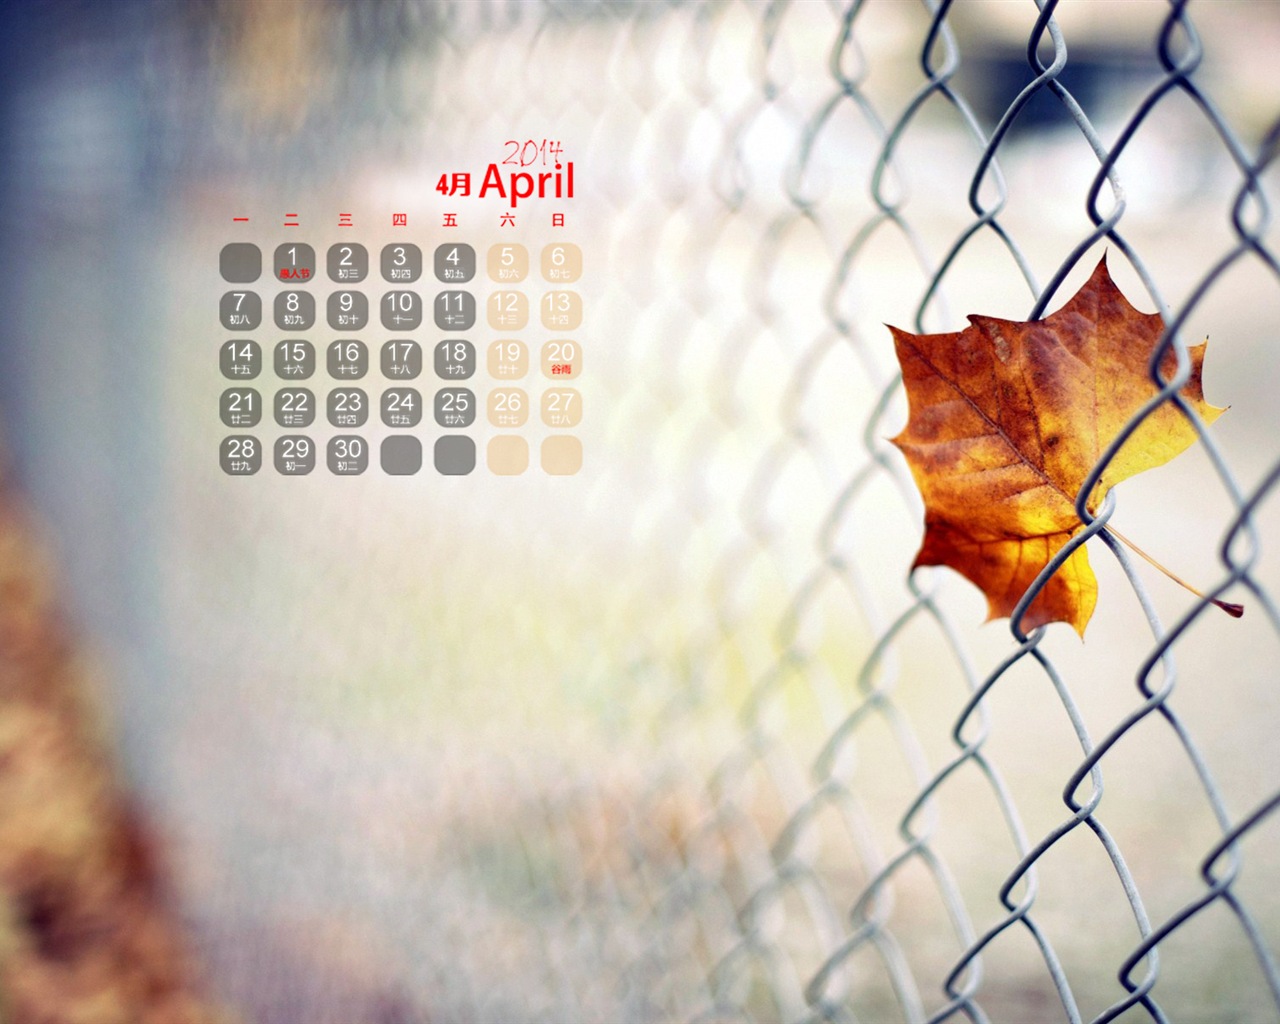 Avril 2014 calendriers fond d'écran (1) #1 - 1280x1024